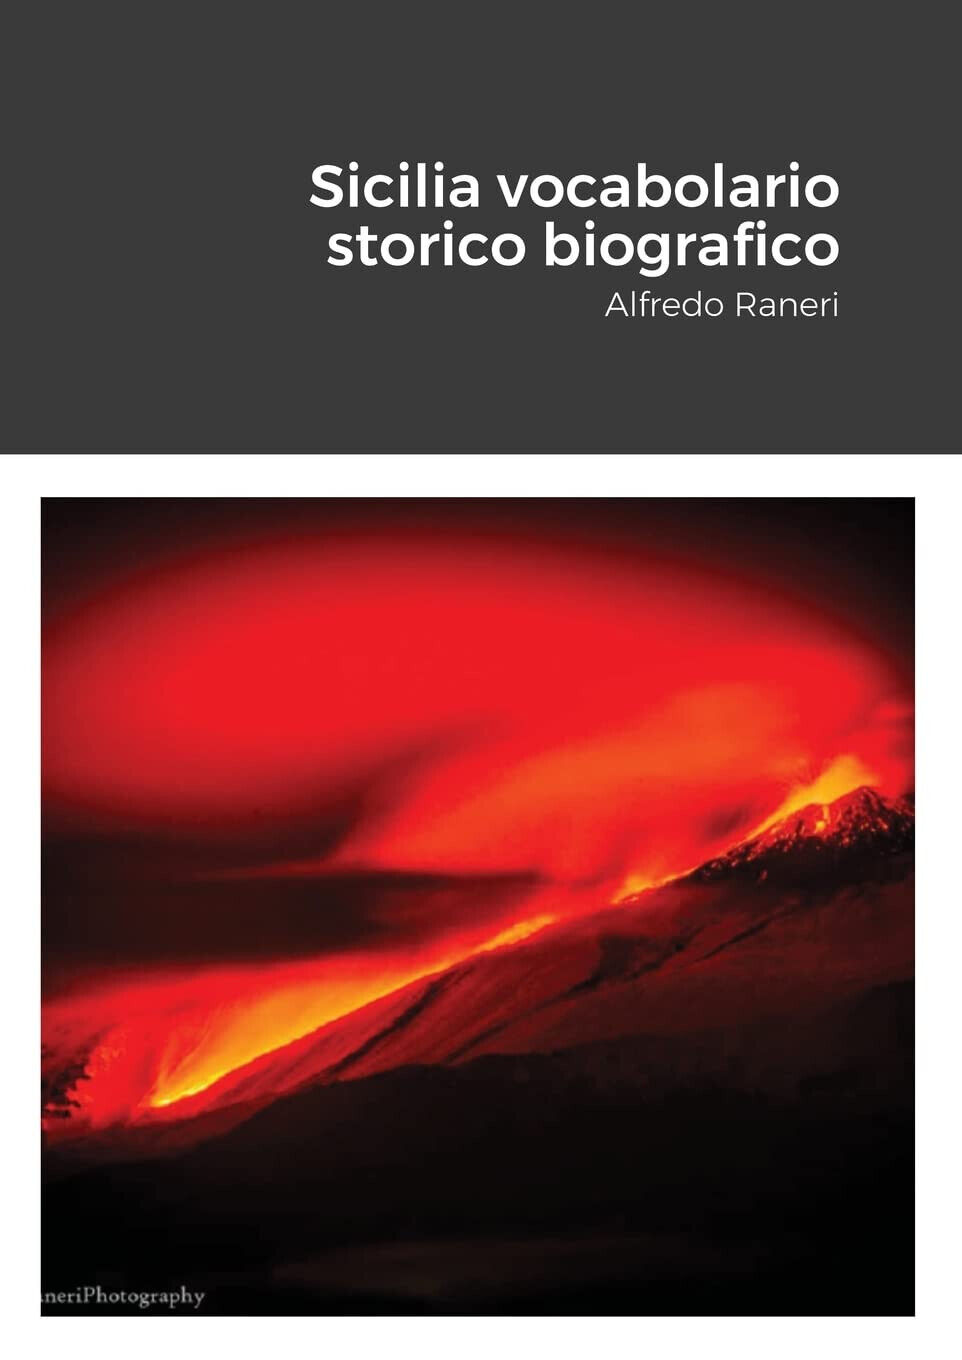 Sicilia vocabolario storico biografico - Alfredo Raneri - Lulu.com, 2021